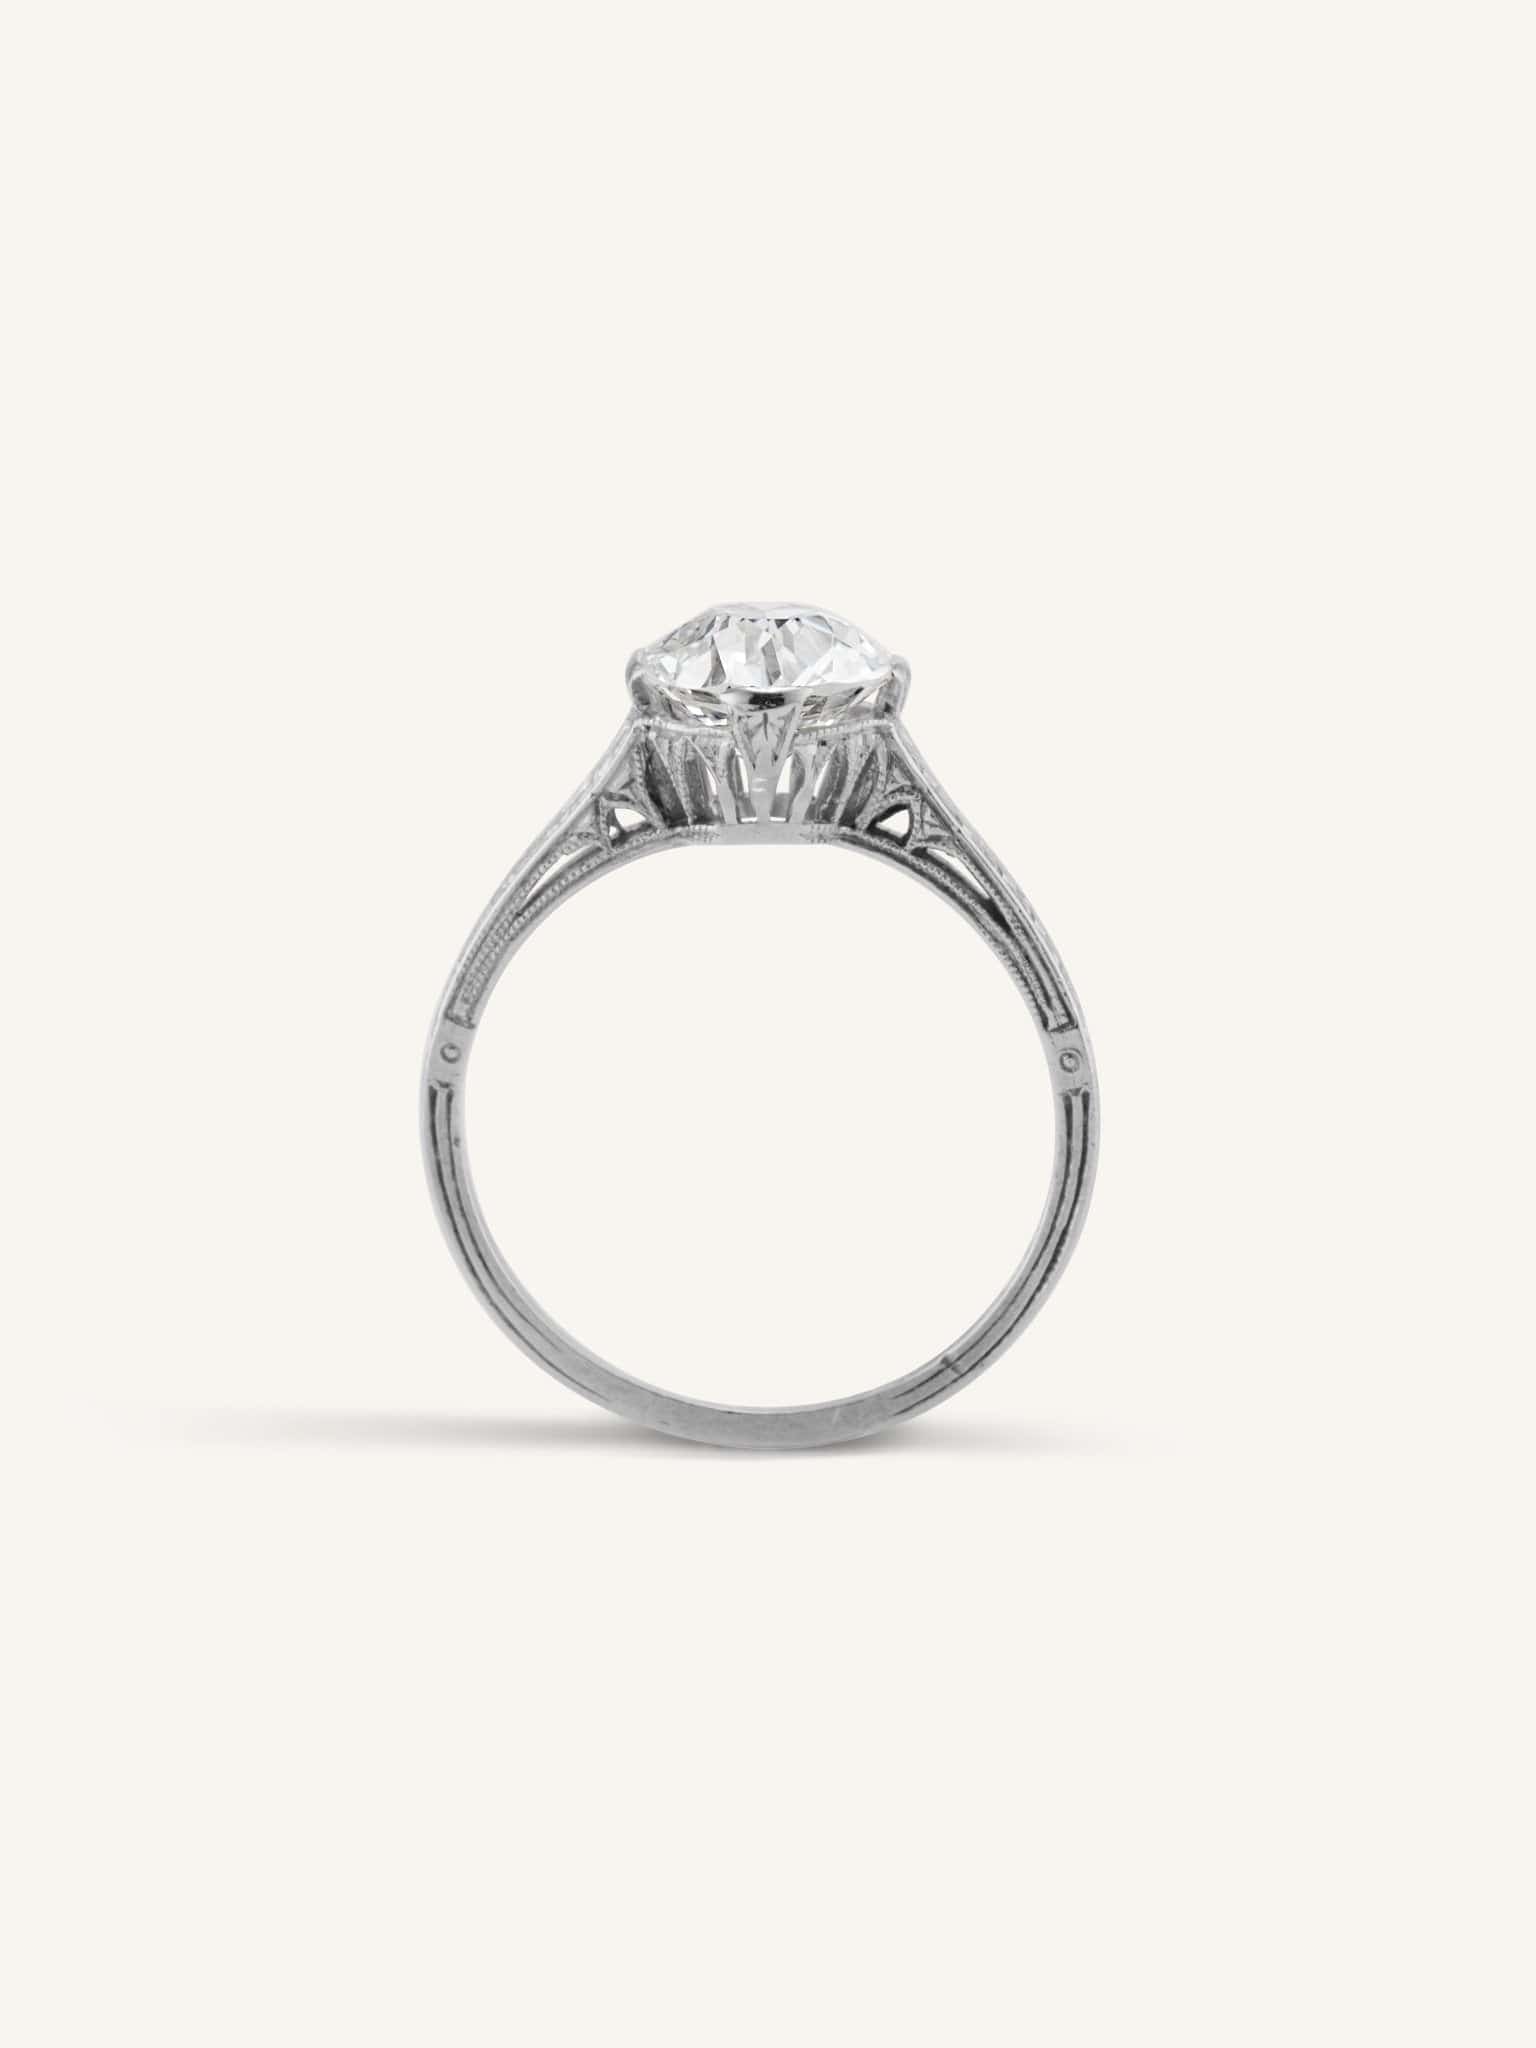 14K WHITE GOLD RING ANTIQUE DIAMOND RING; .50 CARAT DIAMOND; | eBay